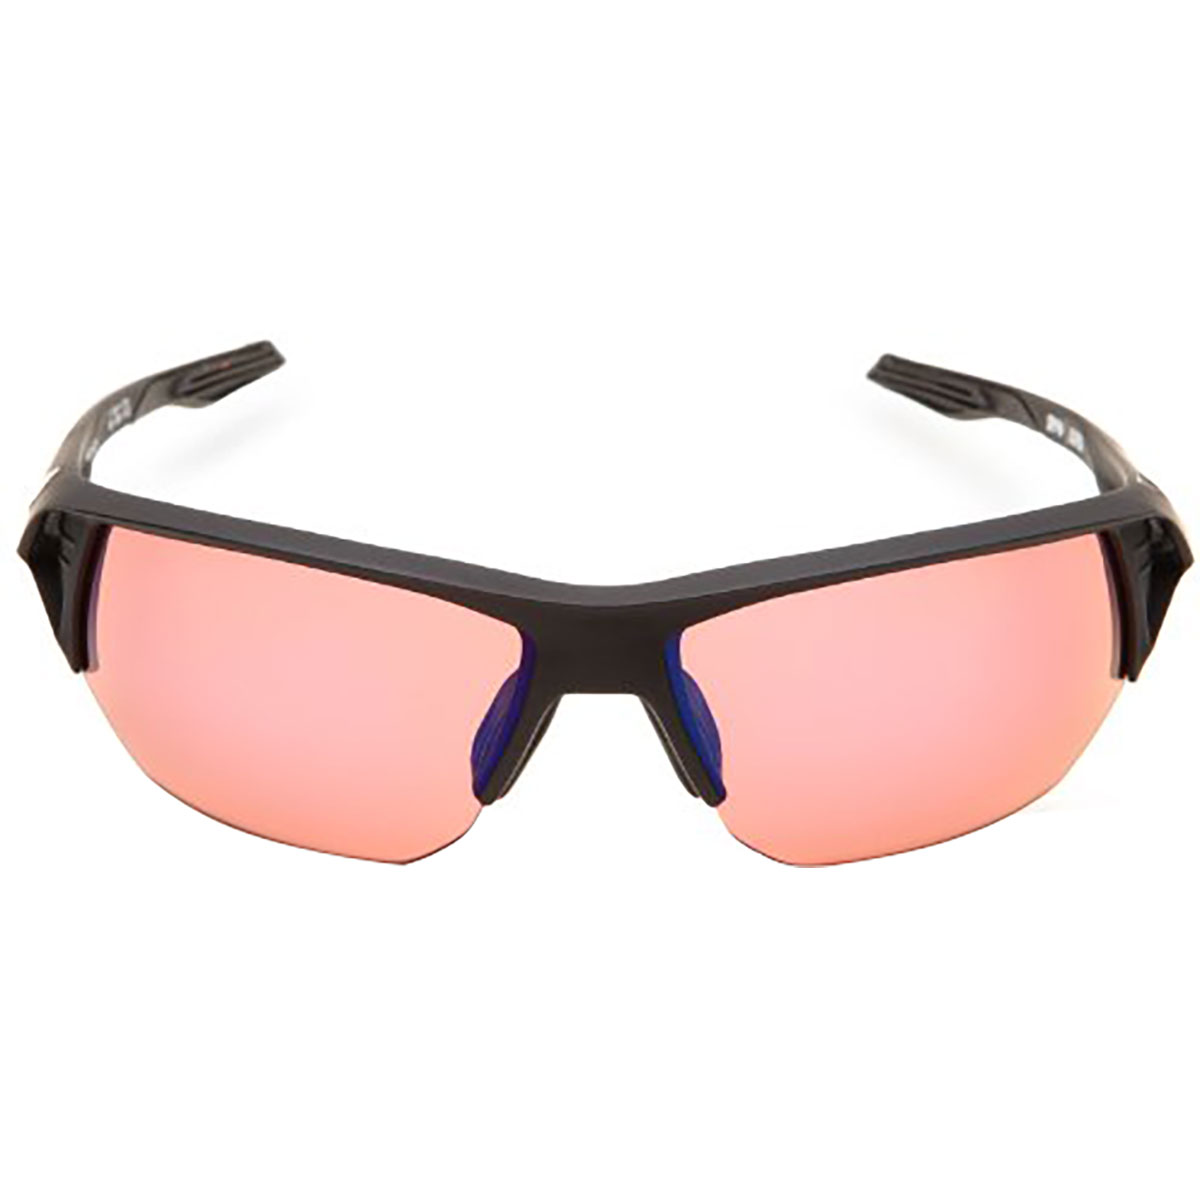 Spy Optic Alpha Sunglasses,OS,Matte Black w/Rose Contact-Blue Mirror Lens - image 1 of 5